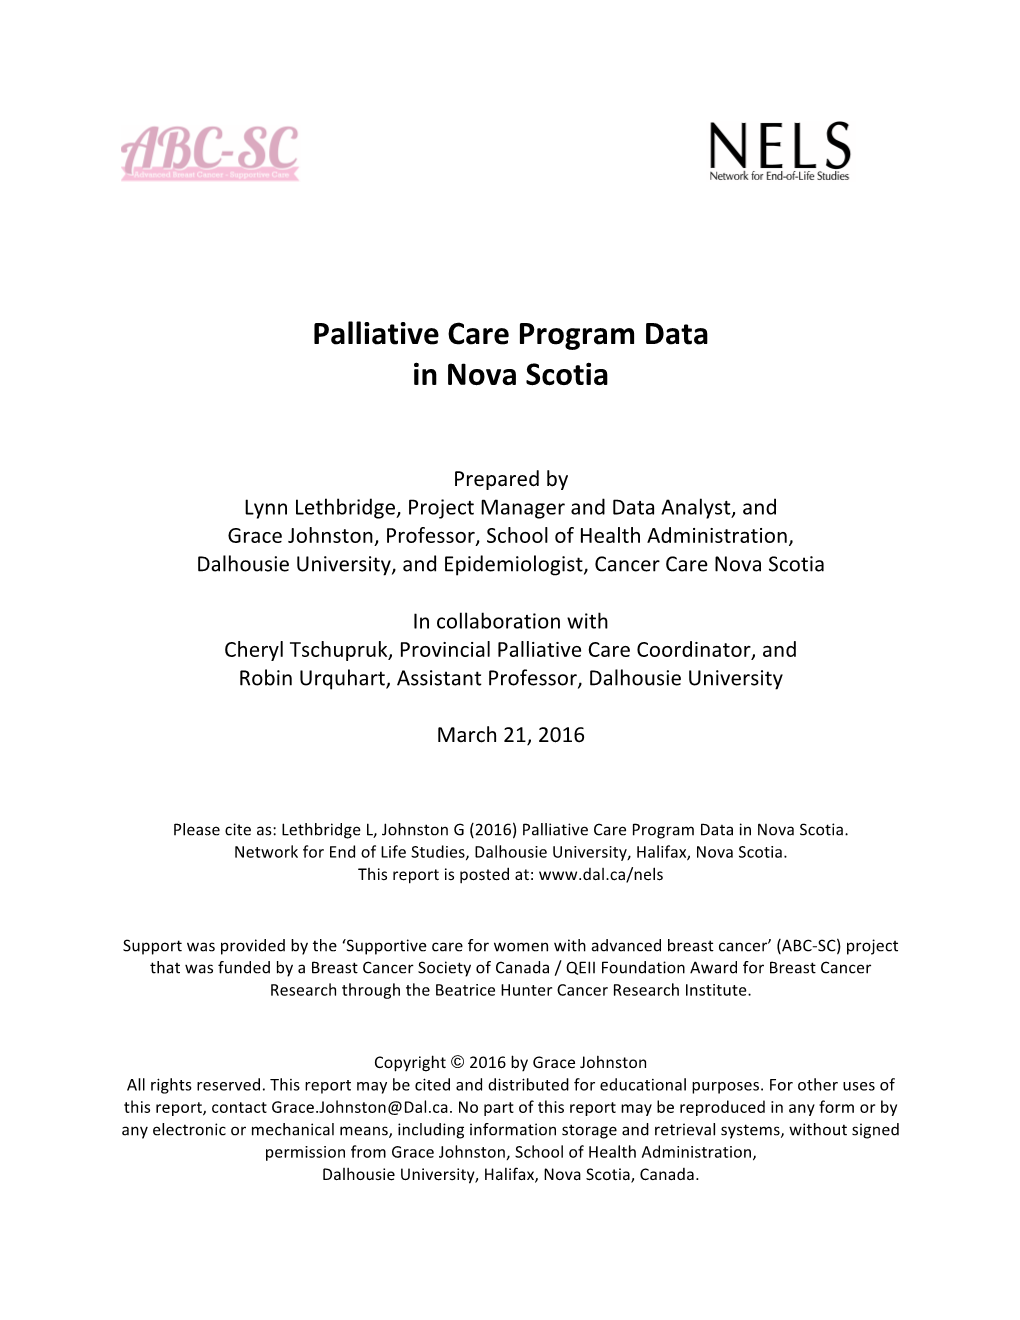 Palliative Care Program Data in Nova Scotia